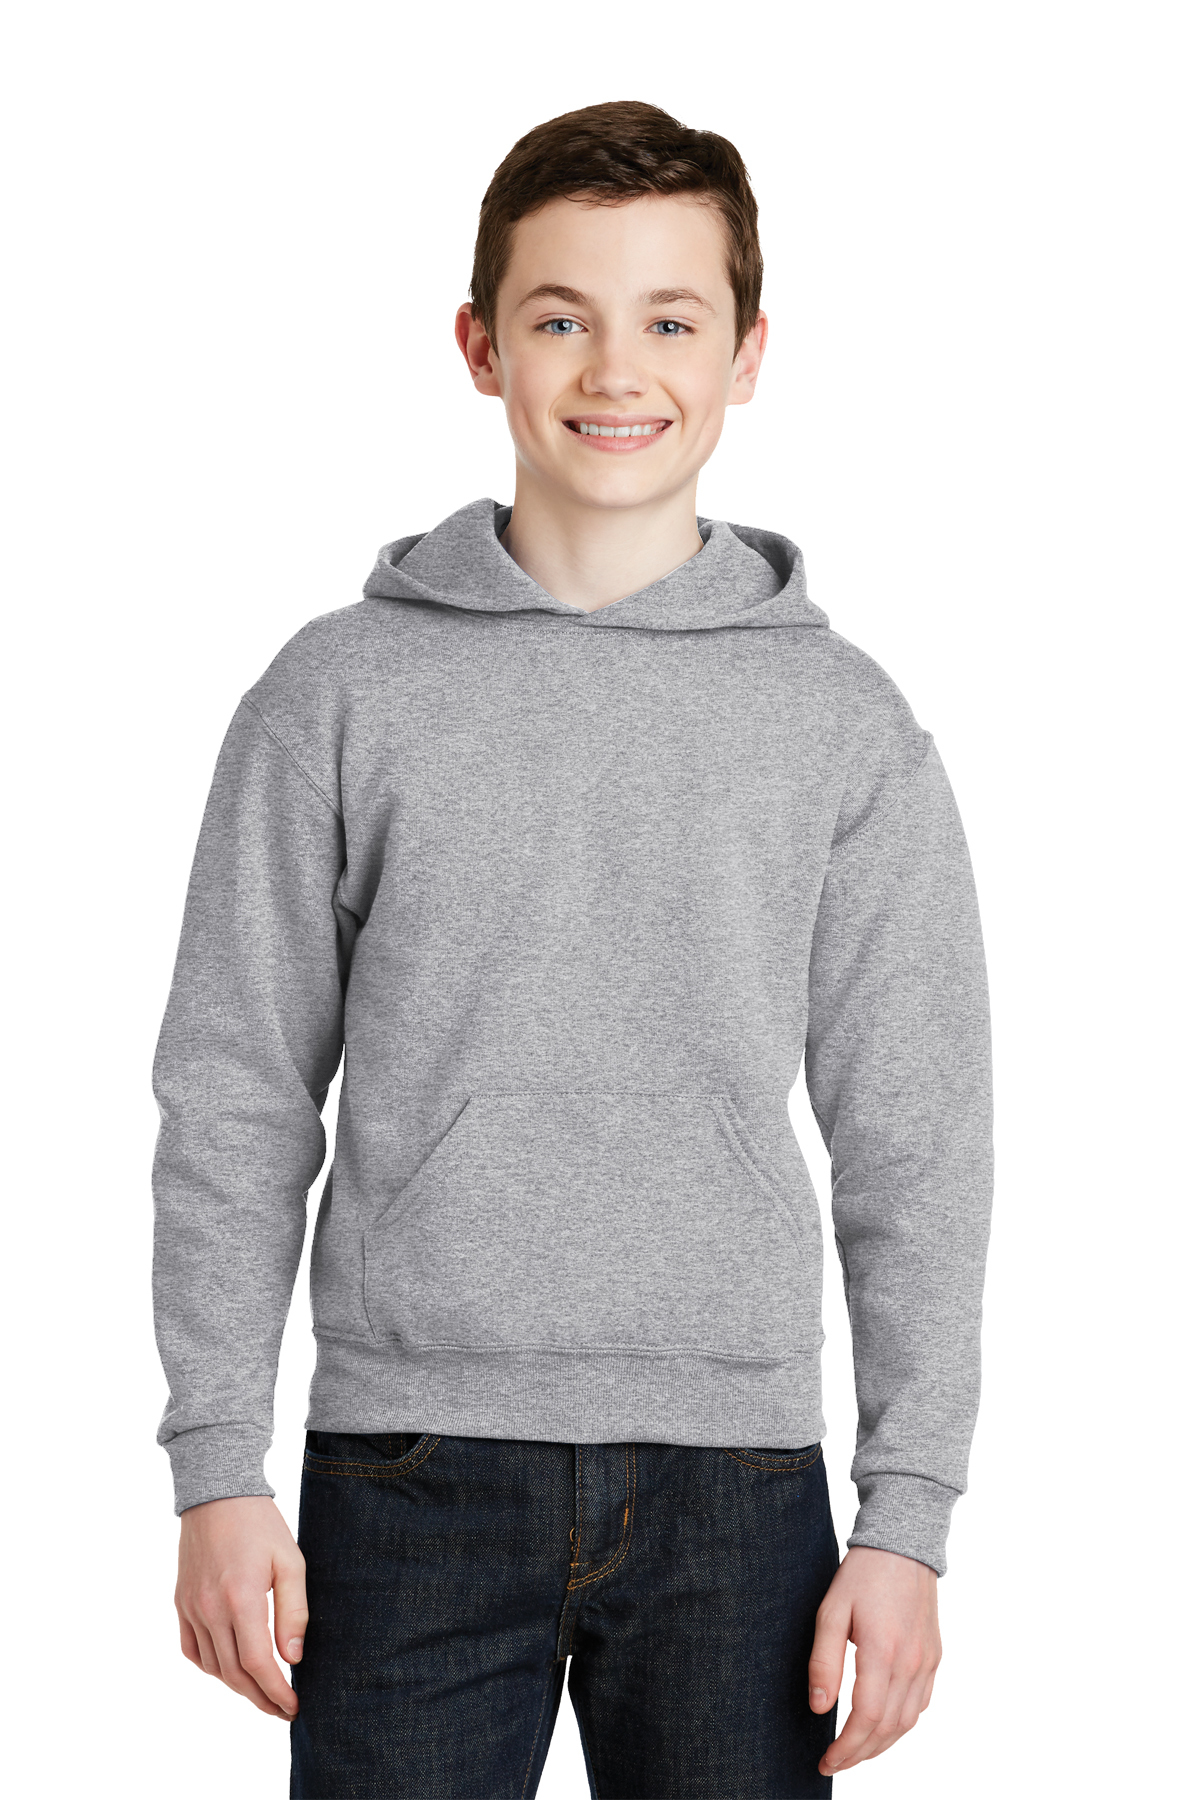 Jerzees - Youth NuBlend Pullover Hooded Sweatshirt | Product | SanMar